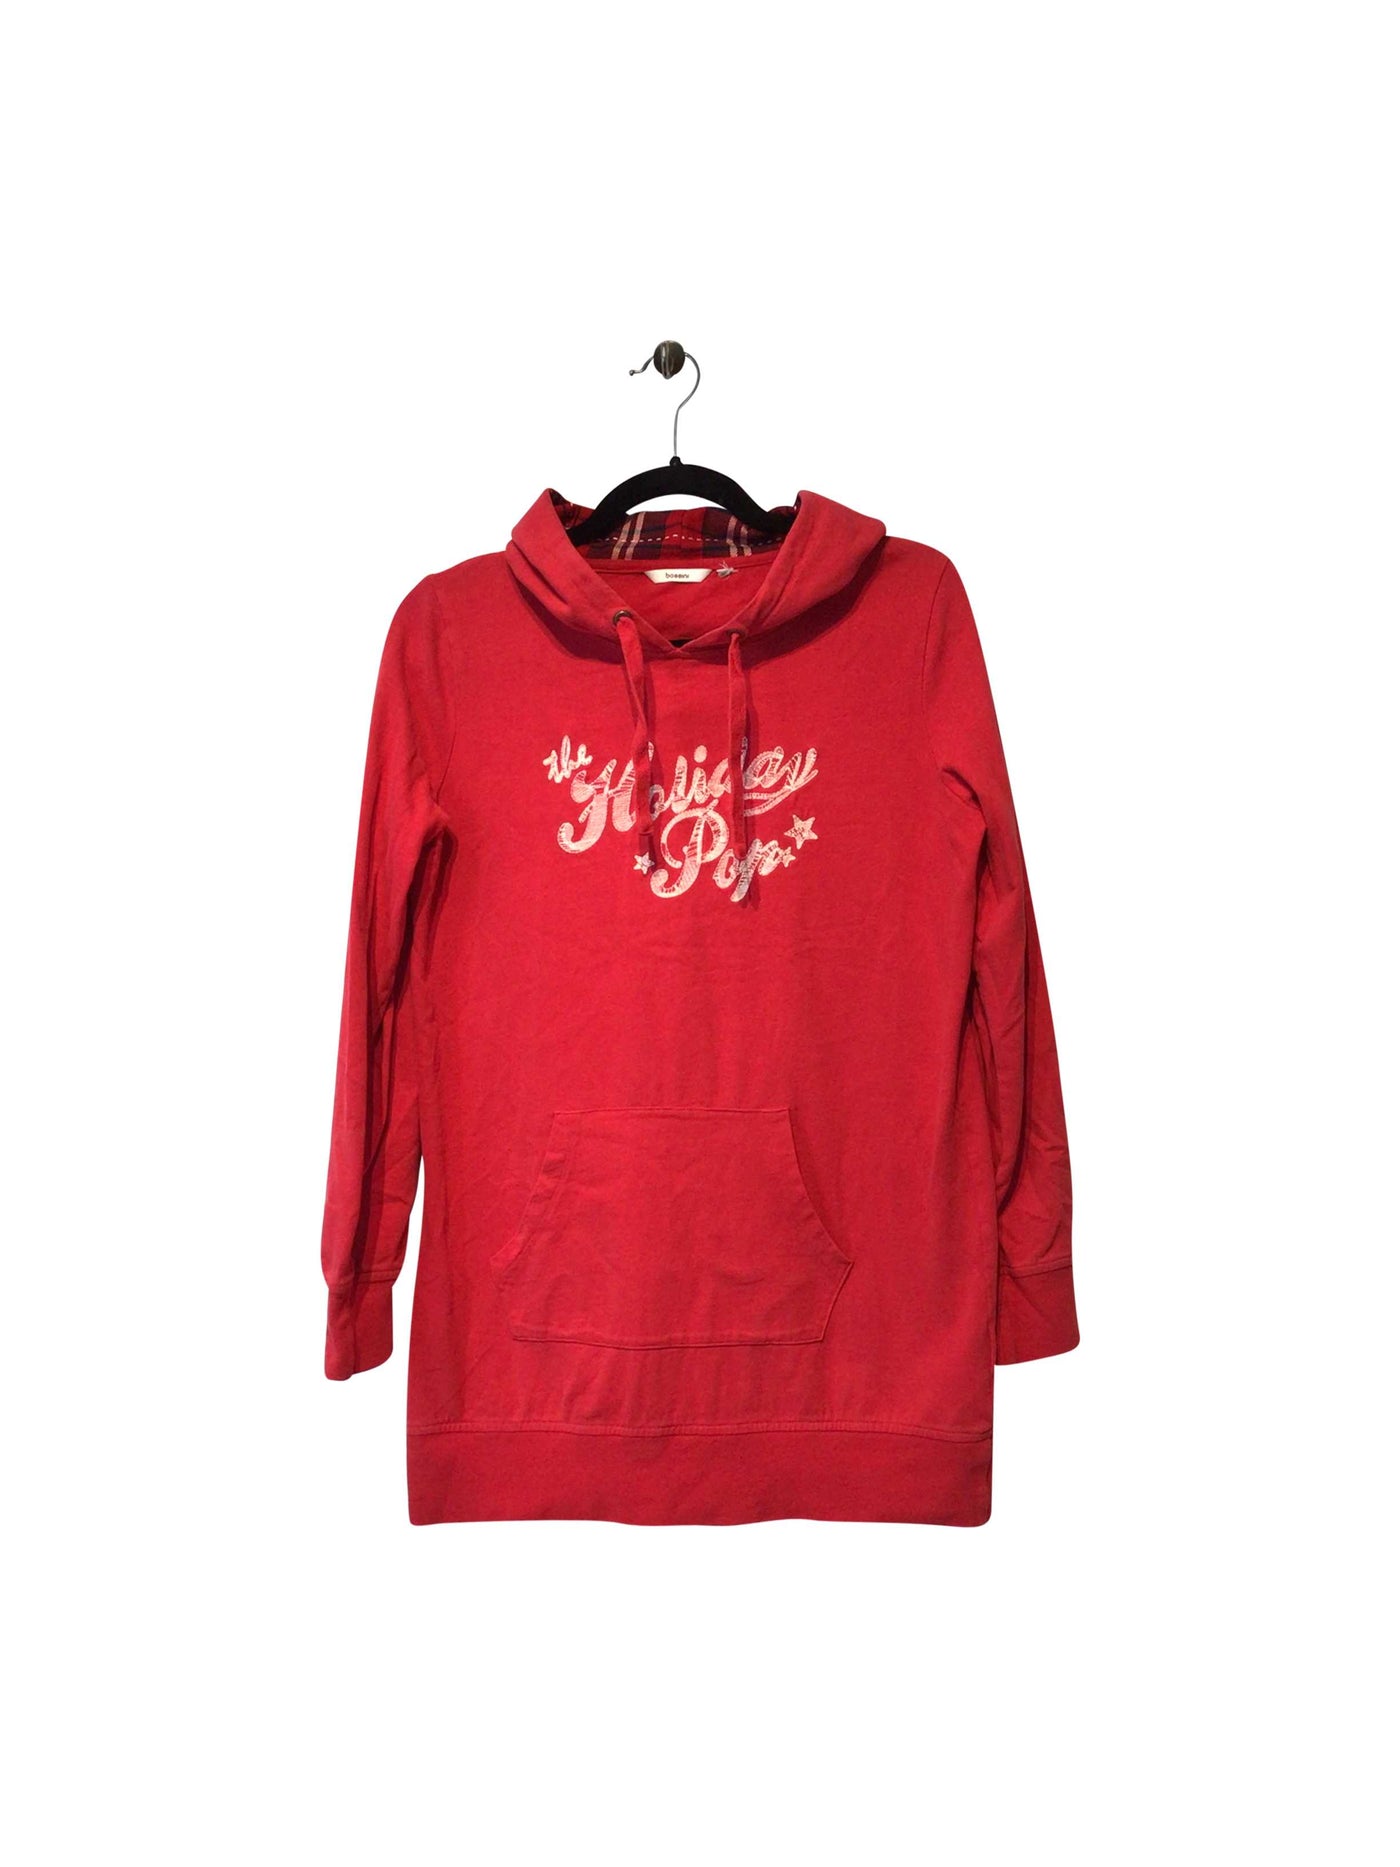 BOSSINI Regular fit Sweatshirt in Red  -  L  6.99 Koop